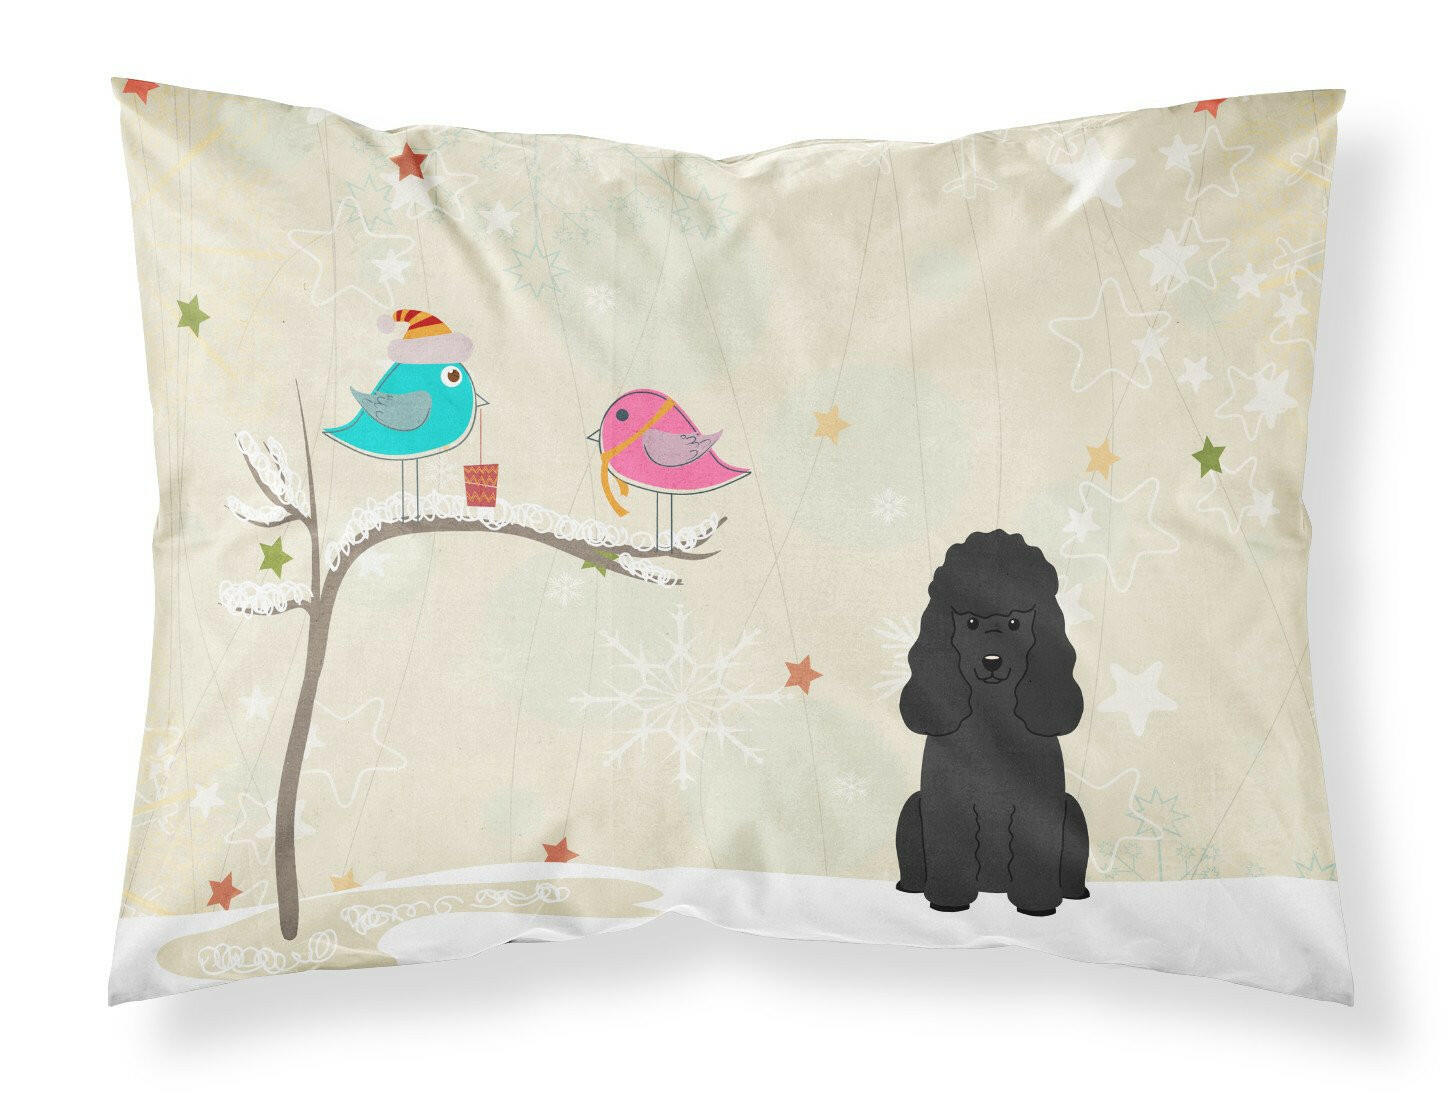 Christmas Presents between Friends Poodle Black Fabric Standard Pillowcase BB2543PILLOWCASE by Caroline's Treasures